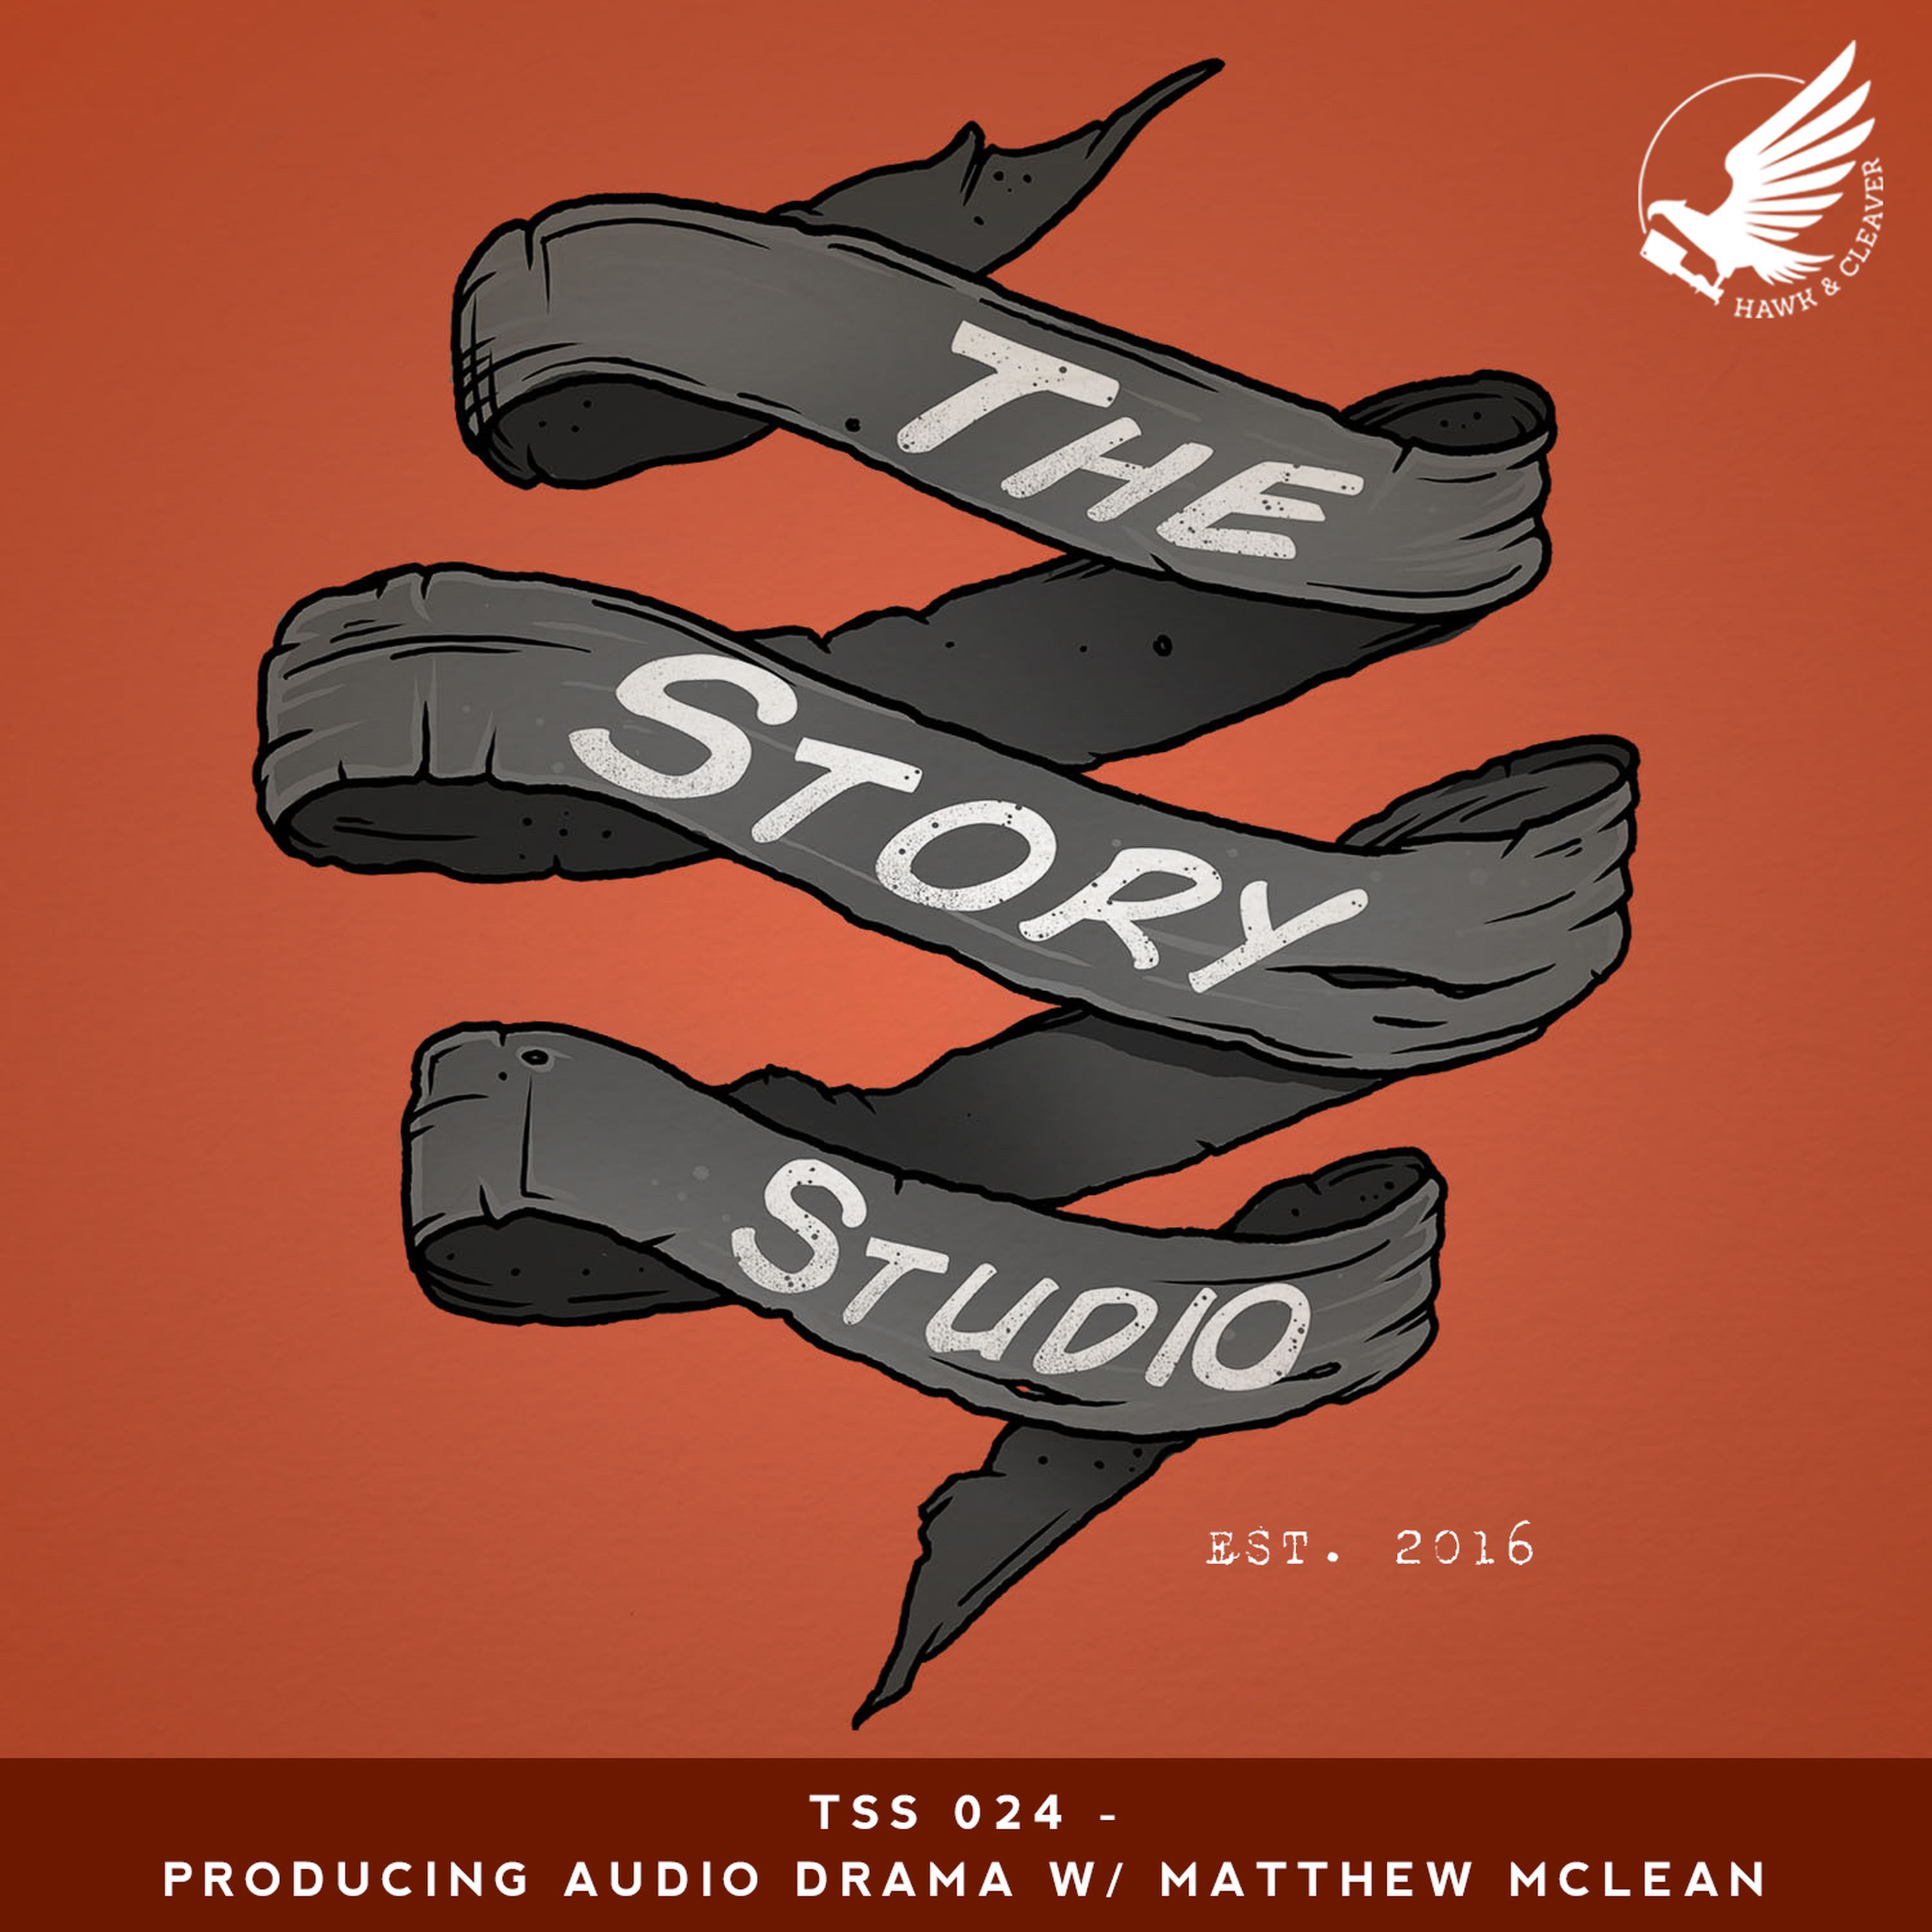 TSS 024 - Producing Audio Drama W/ Matthew McLean